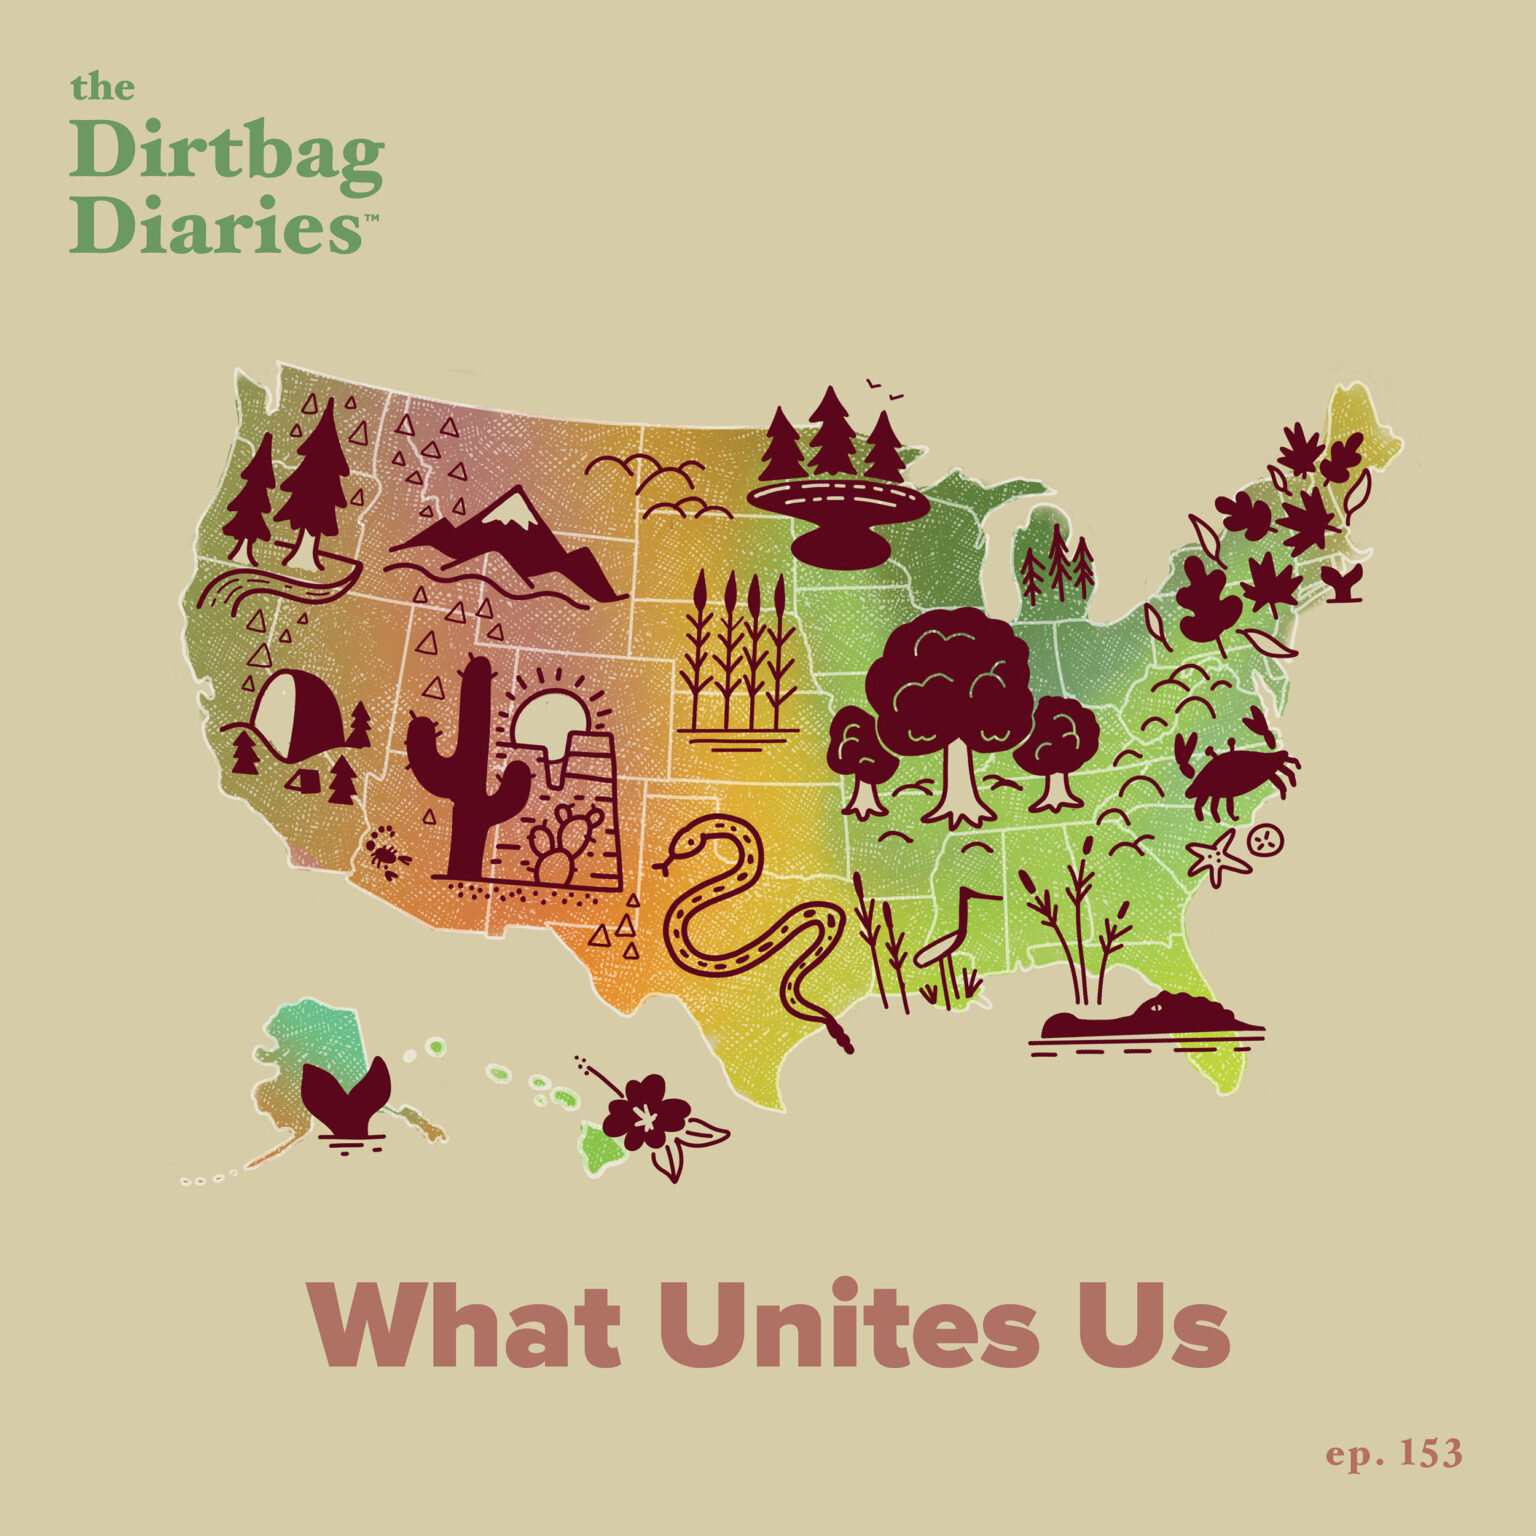 The Dirtbag Diaries - What Unites Us